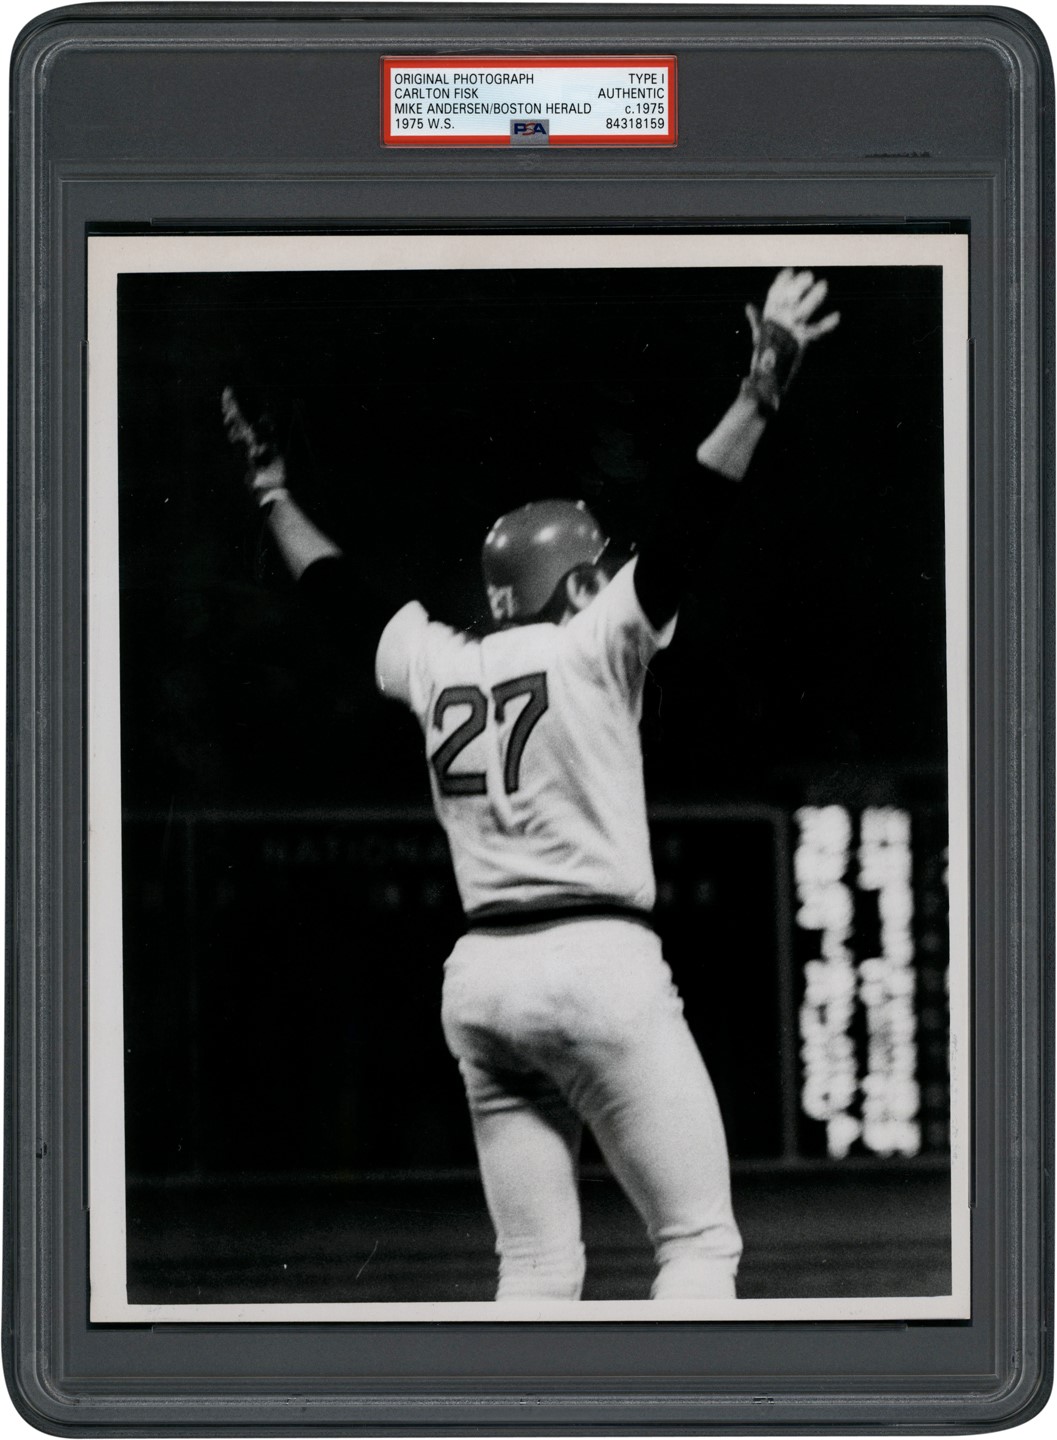 Vintage Sports Photographs - 1975 Carlton Fisk World Series Game 6 Home Run Photograph (PSA Type I)